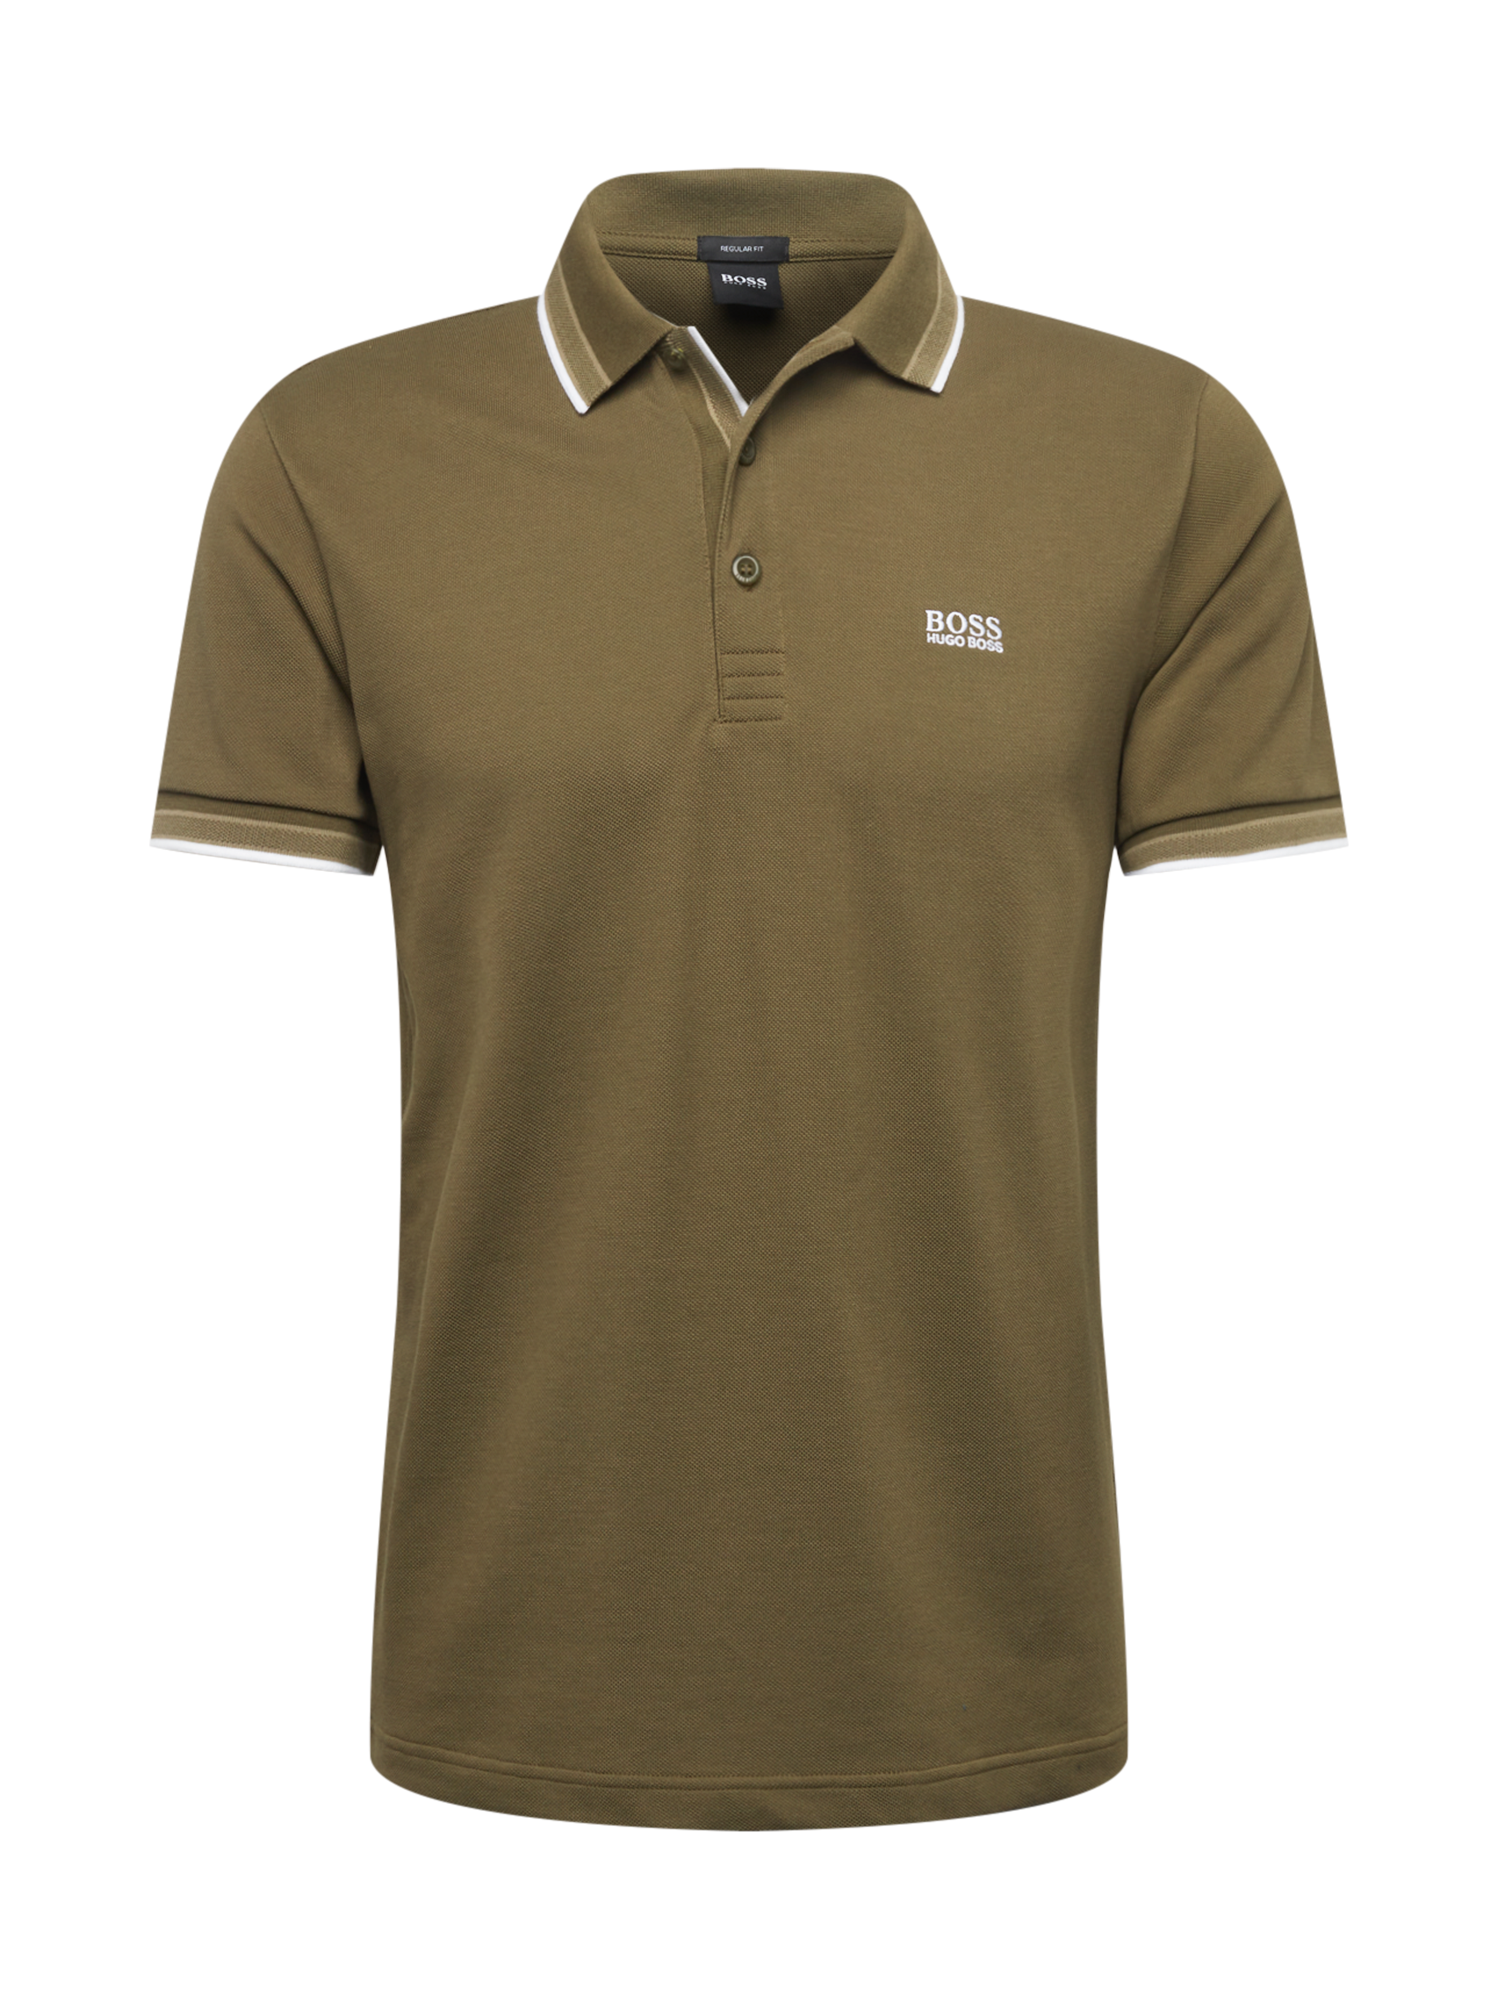 pwhxN Premium BOSS ATHLEISURE Koszulka Paddy w kolorze Oliwkowy, Khakim 